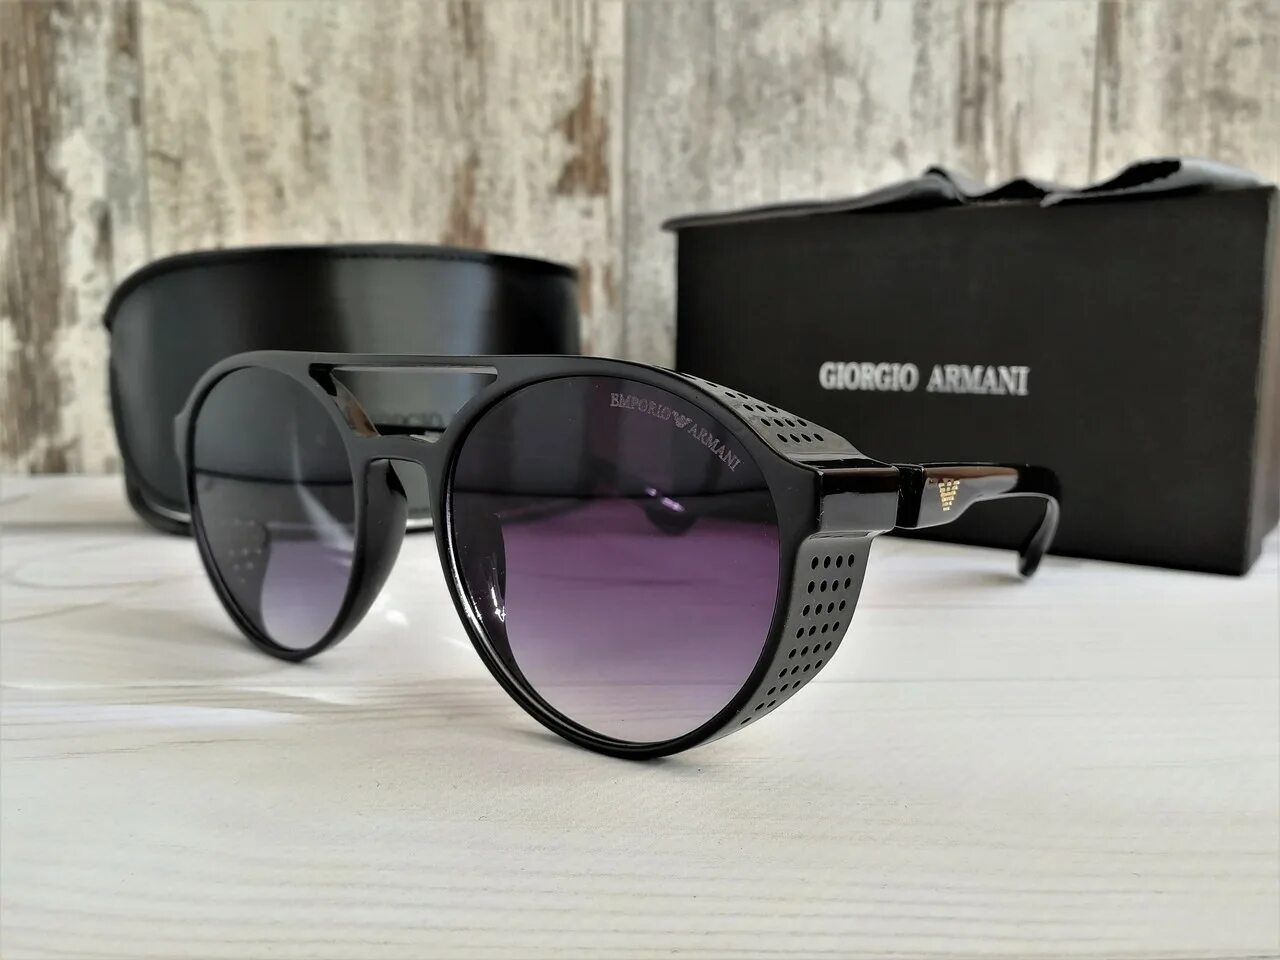 Очки Эмпорио Армани. Очки Джорджио Армани. Giorgio Armani очки солнцезащитные мужские. Очки Джорджио Армани мужские солнцезащитные 135.